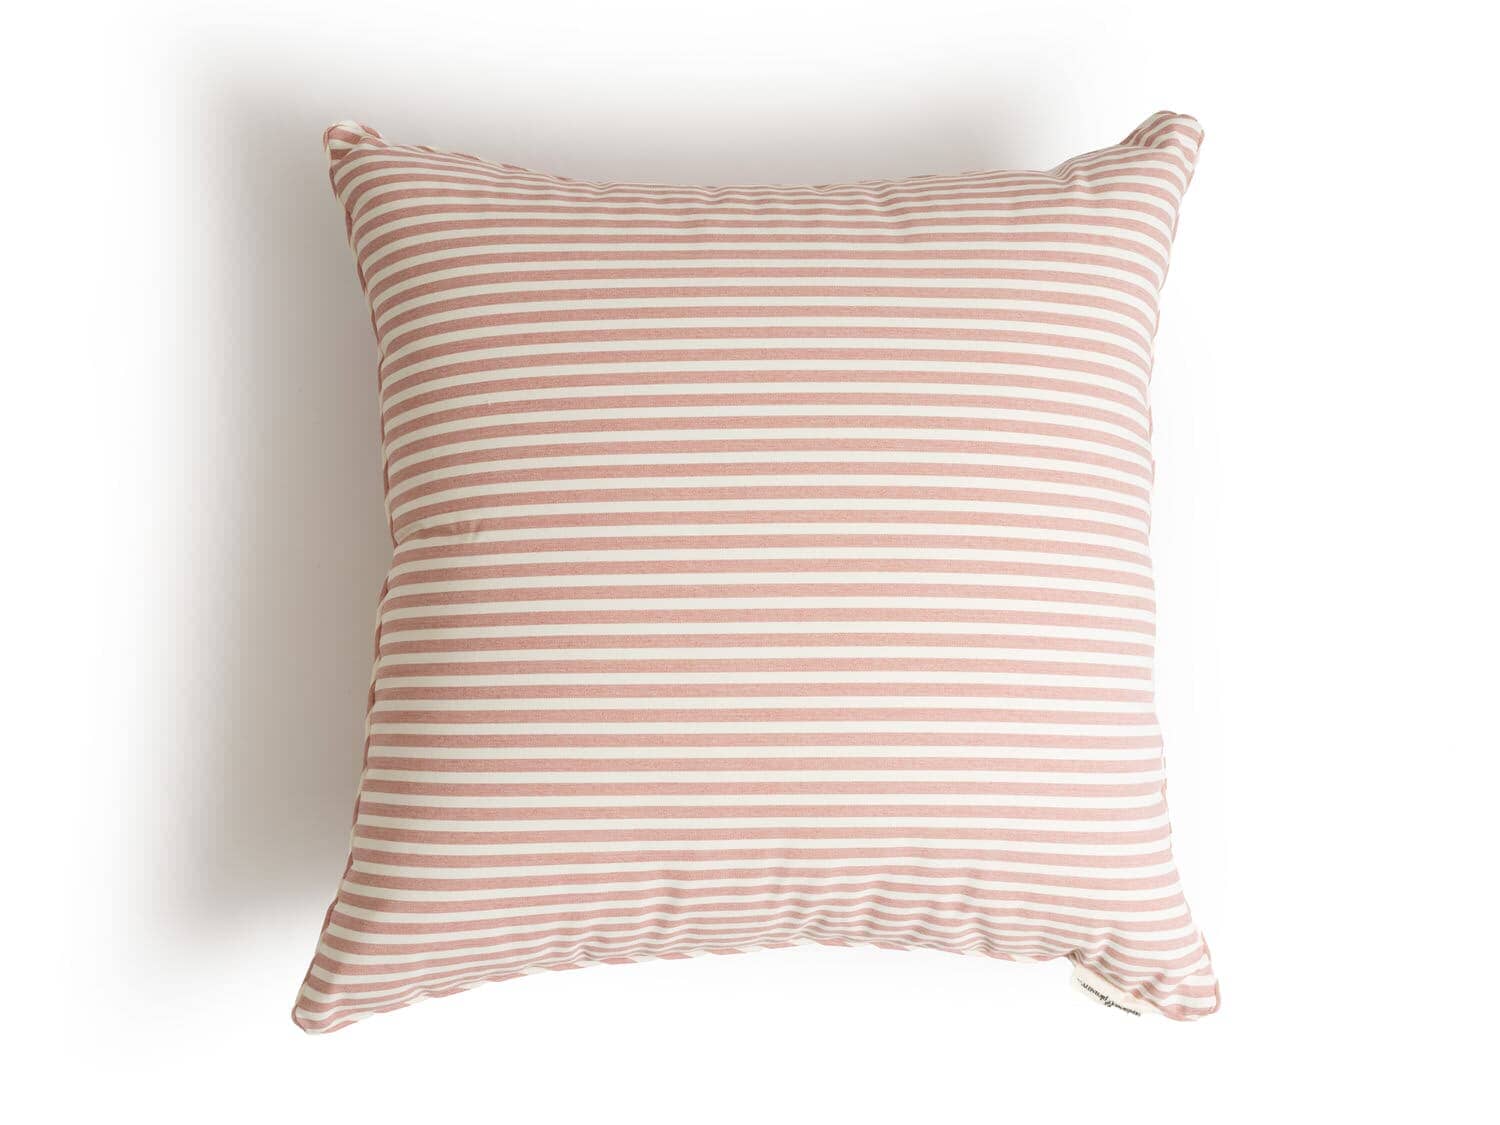 Studio image of pink euro throw pillow